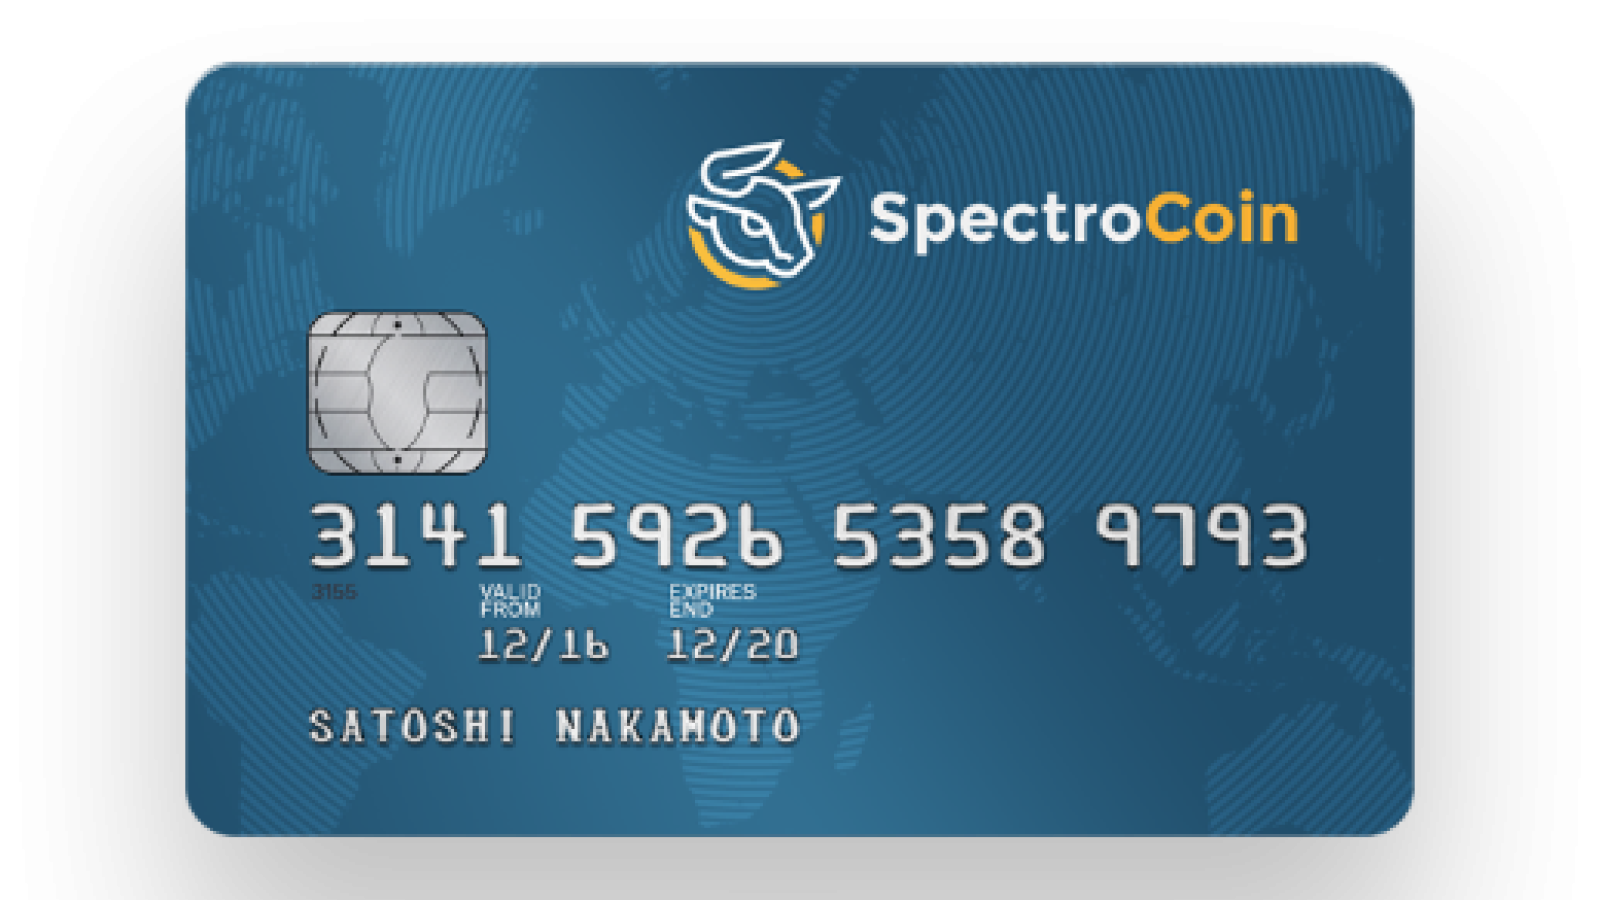 SpectroCoin Visa Debit Card